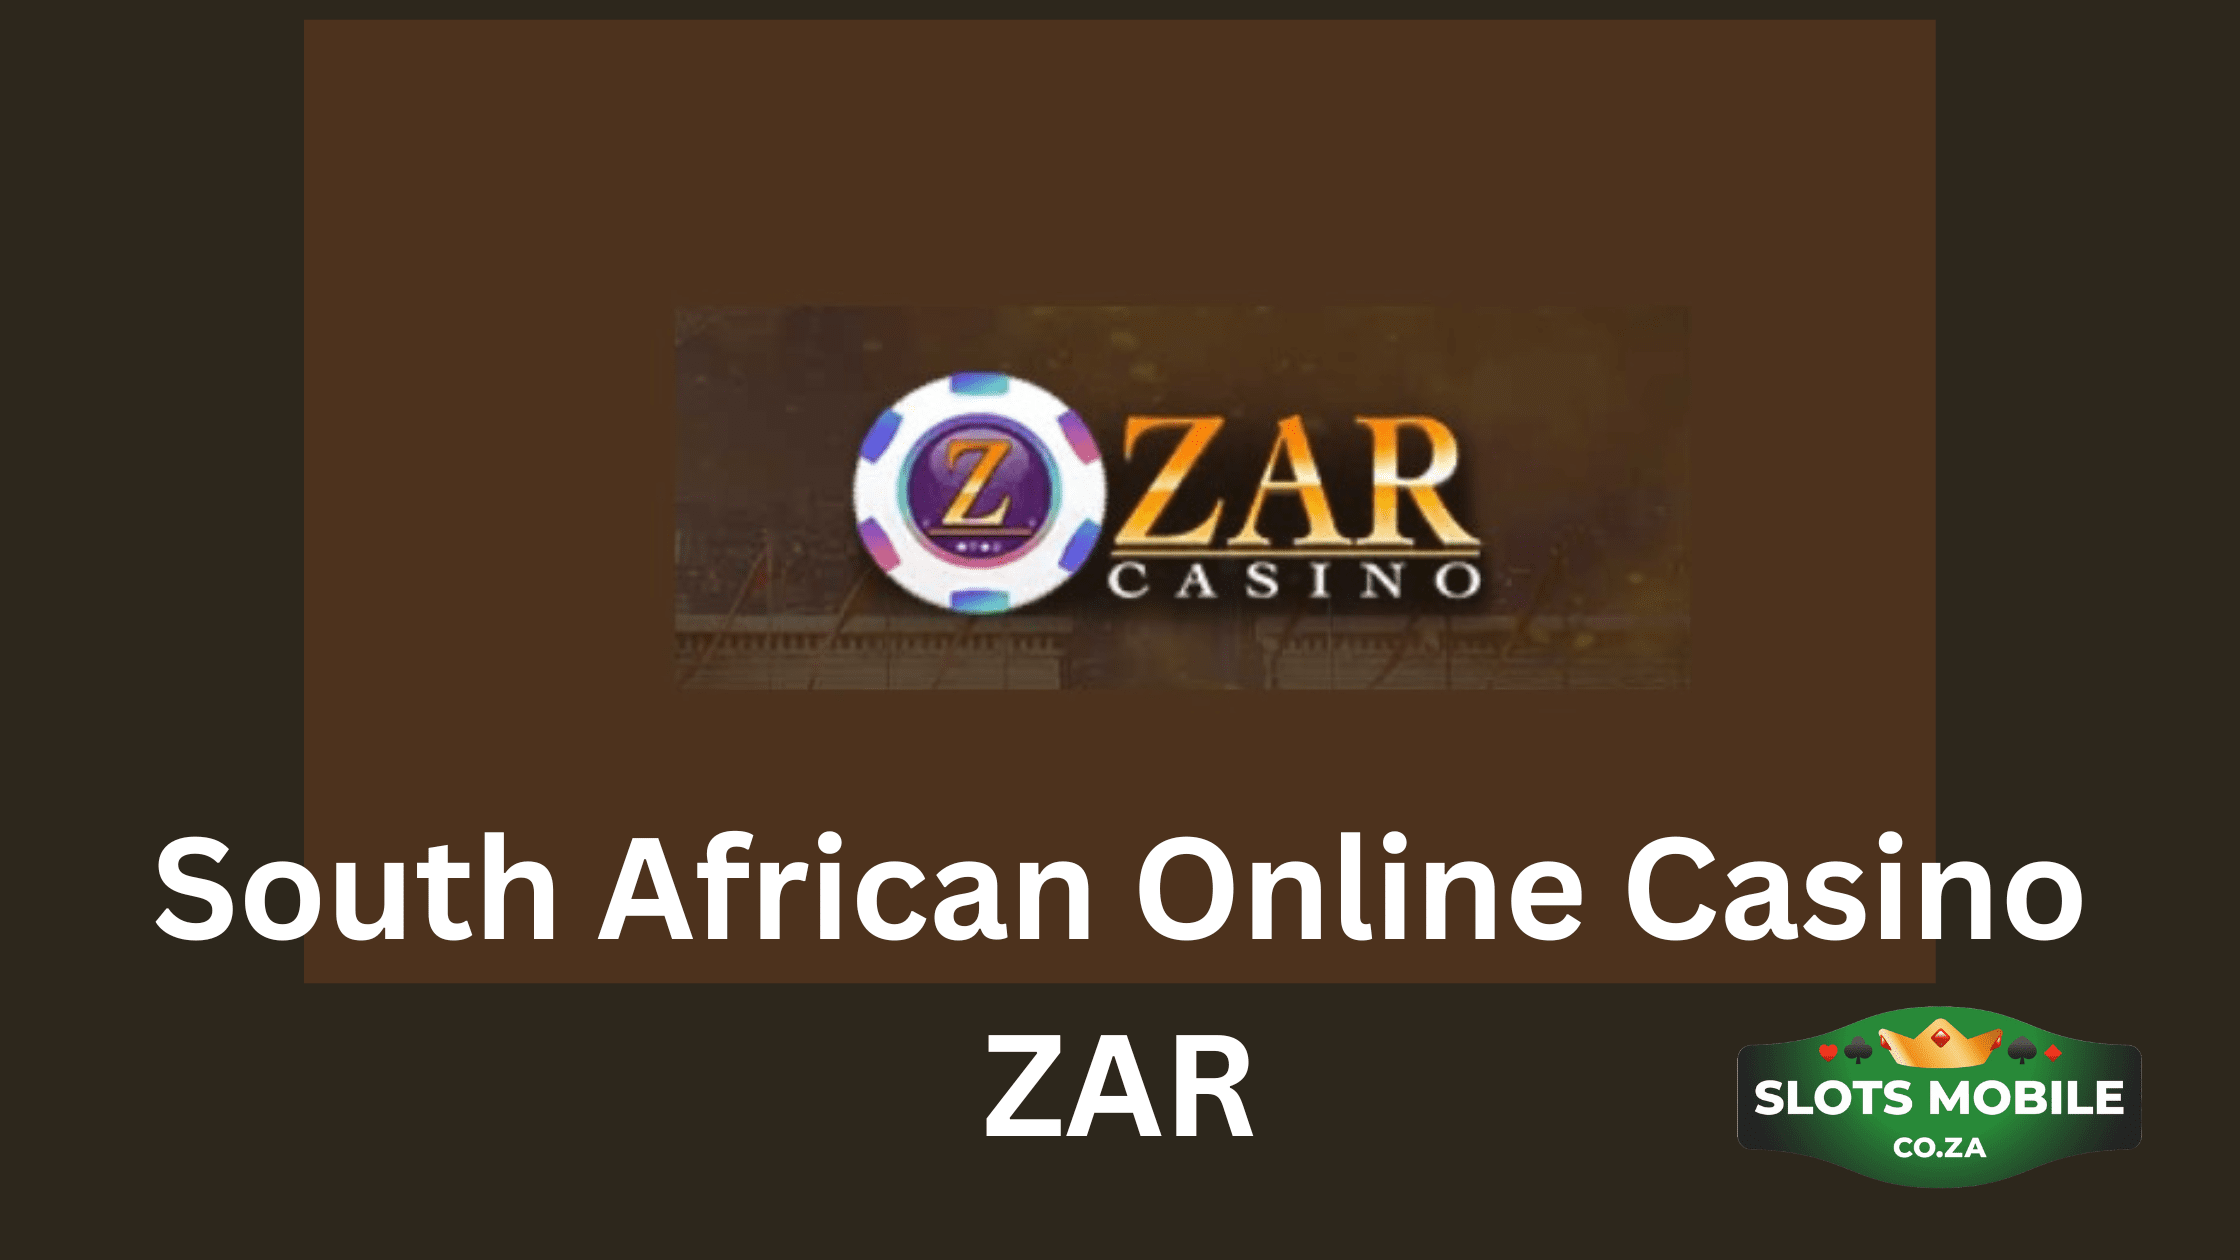 South African Online Casino ZAR